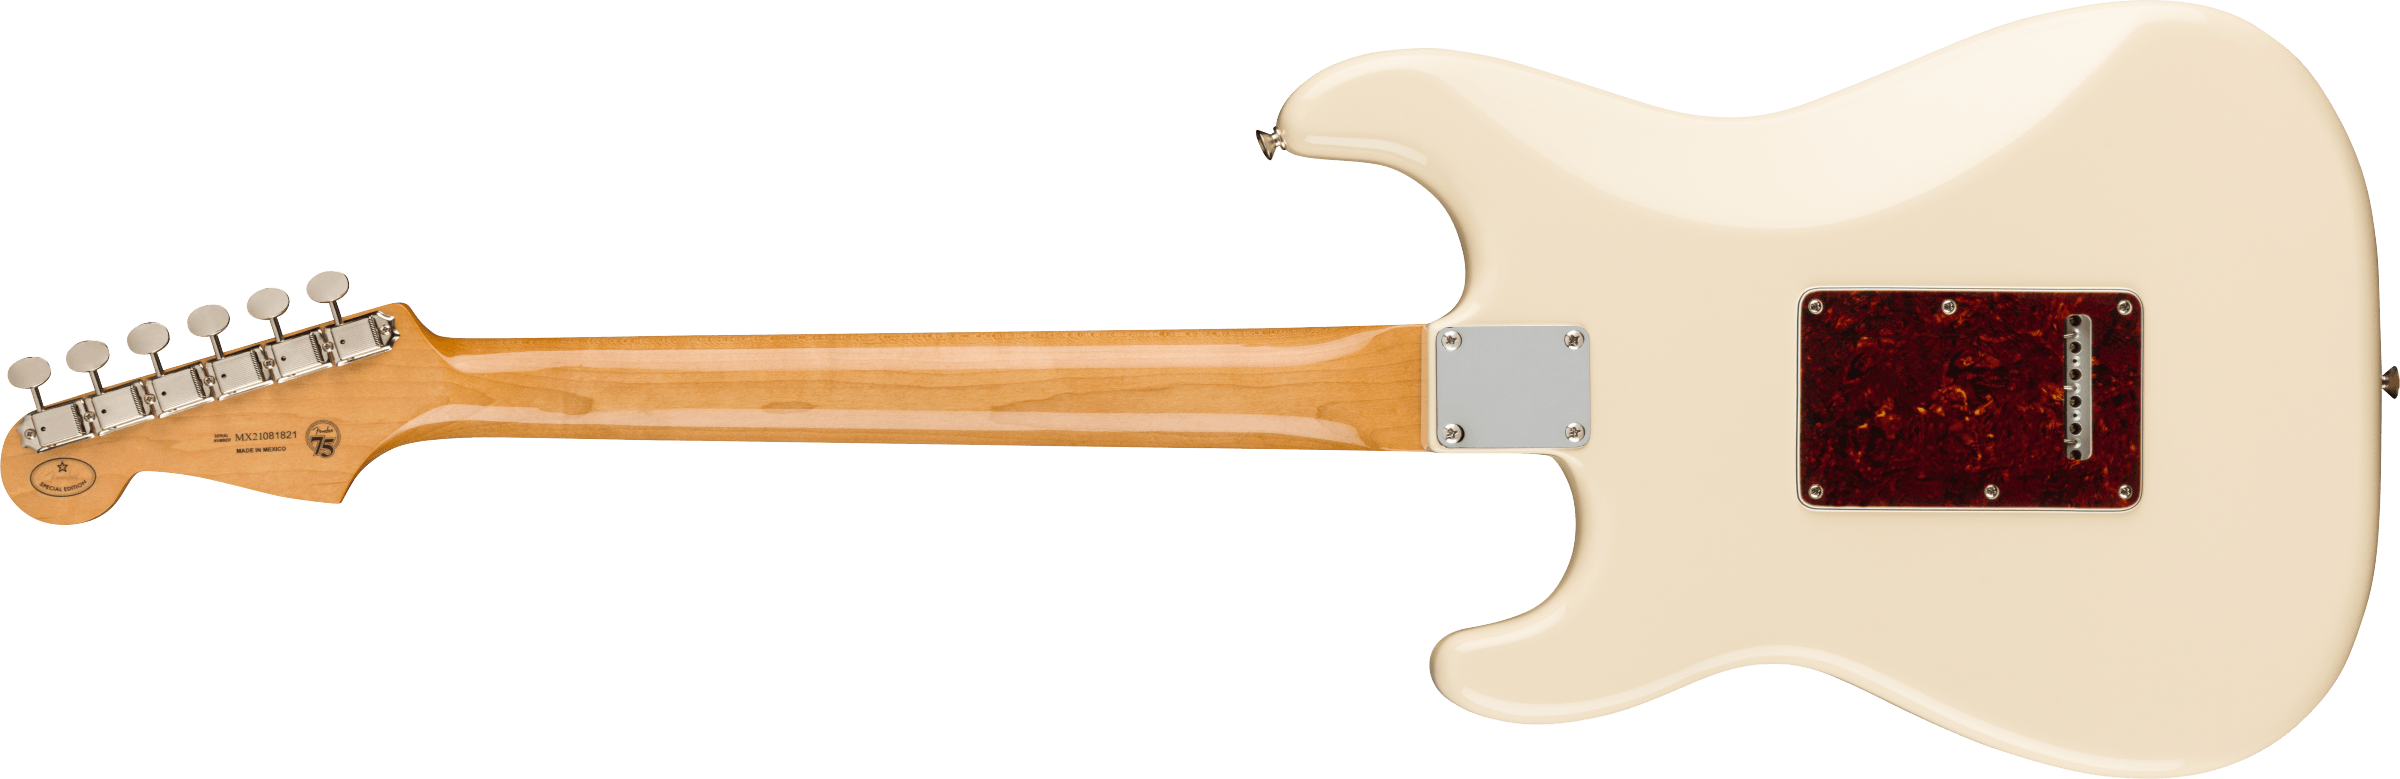 Fender Strat 60s Vintera Ltd Mex Pf - Olympic White - Str shape electric guitar - Variation 1